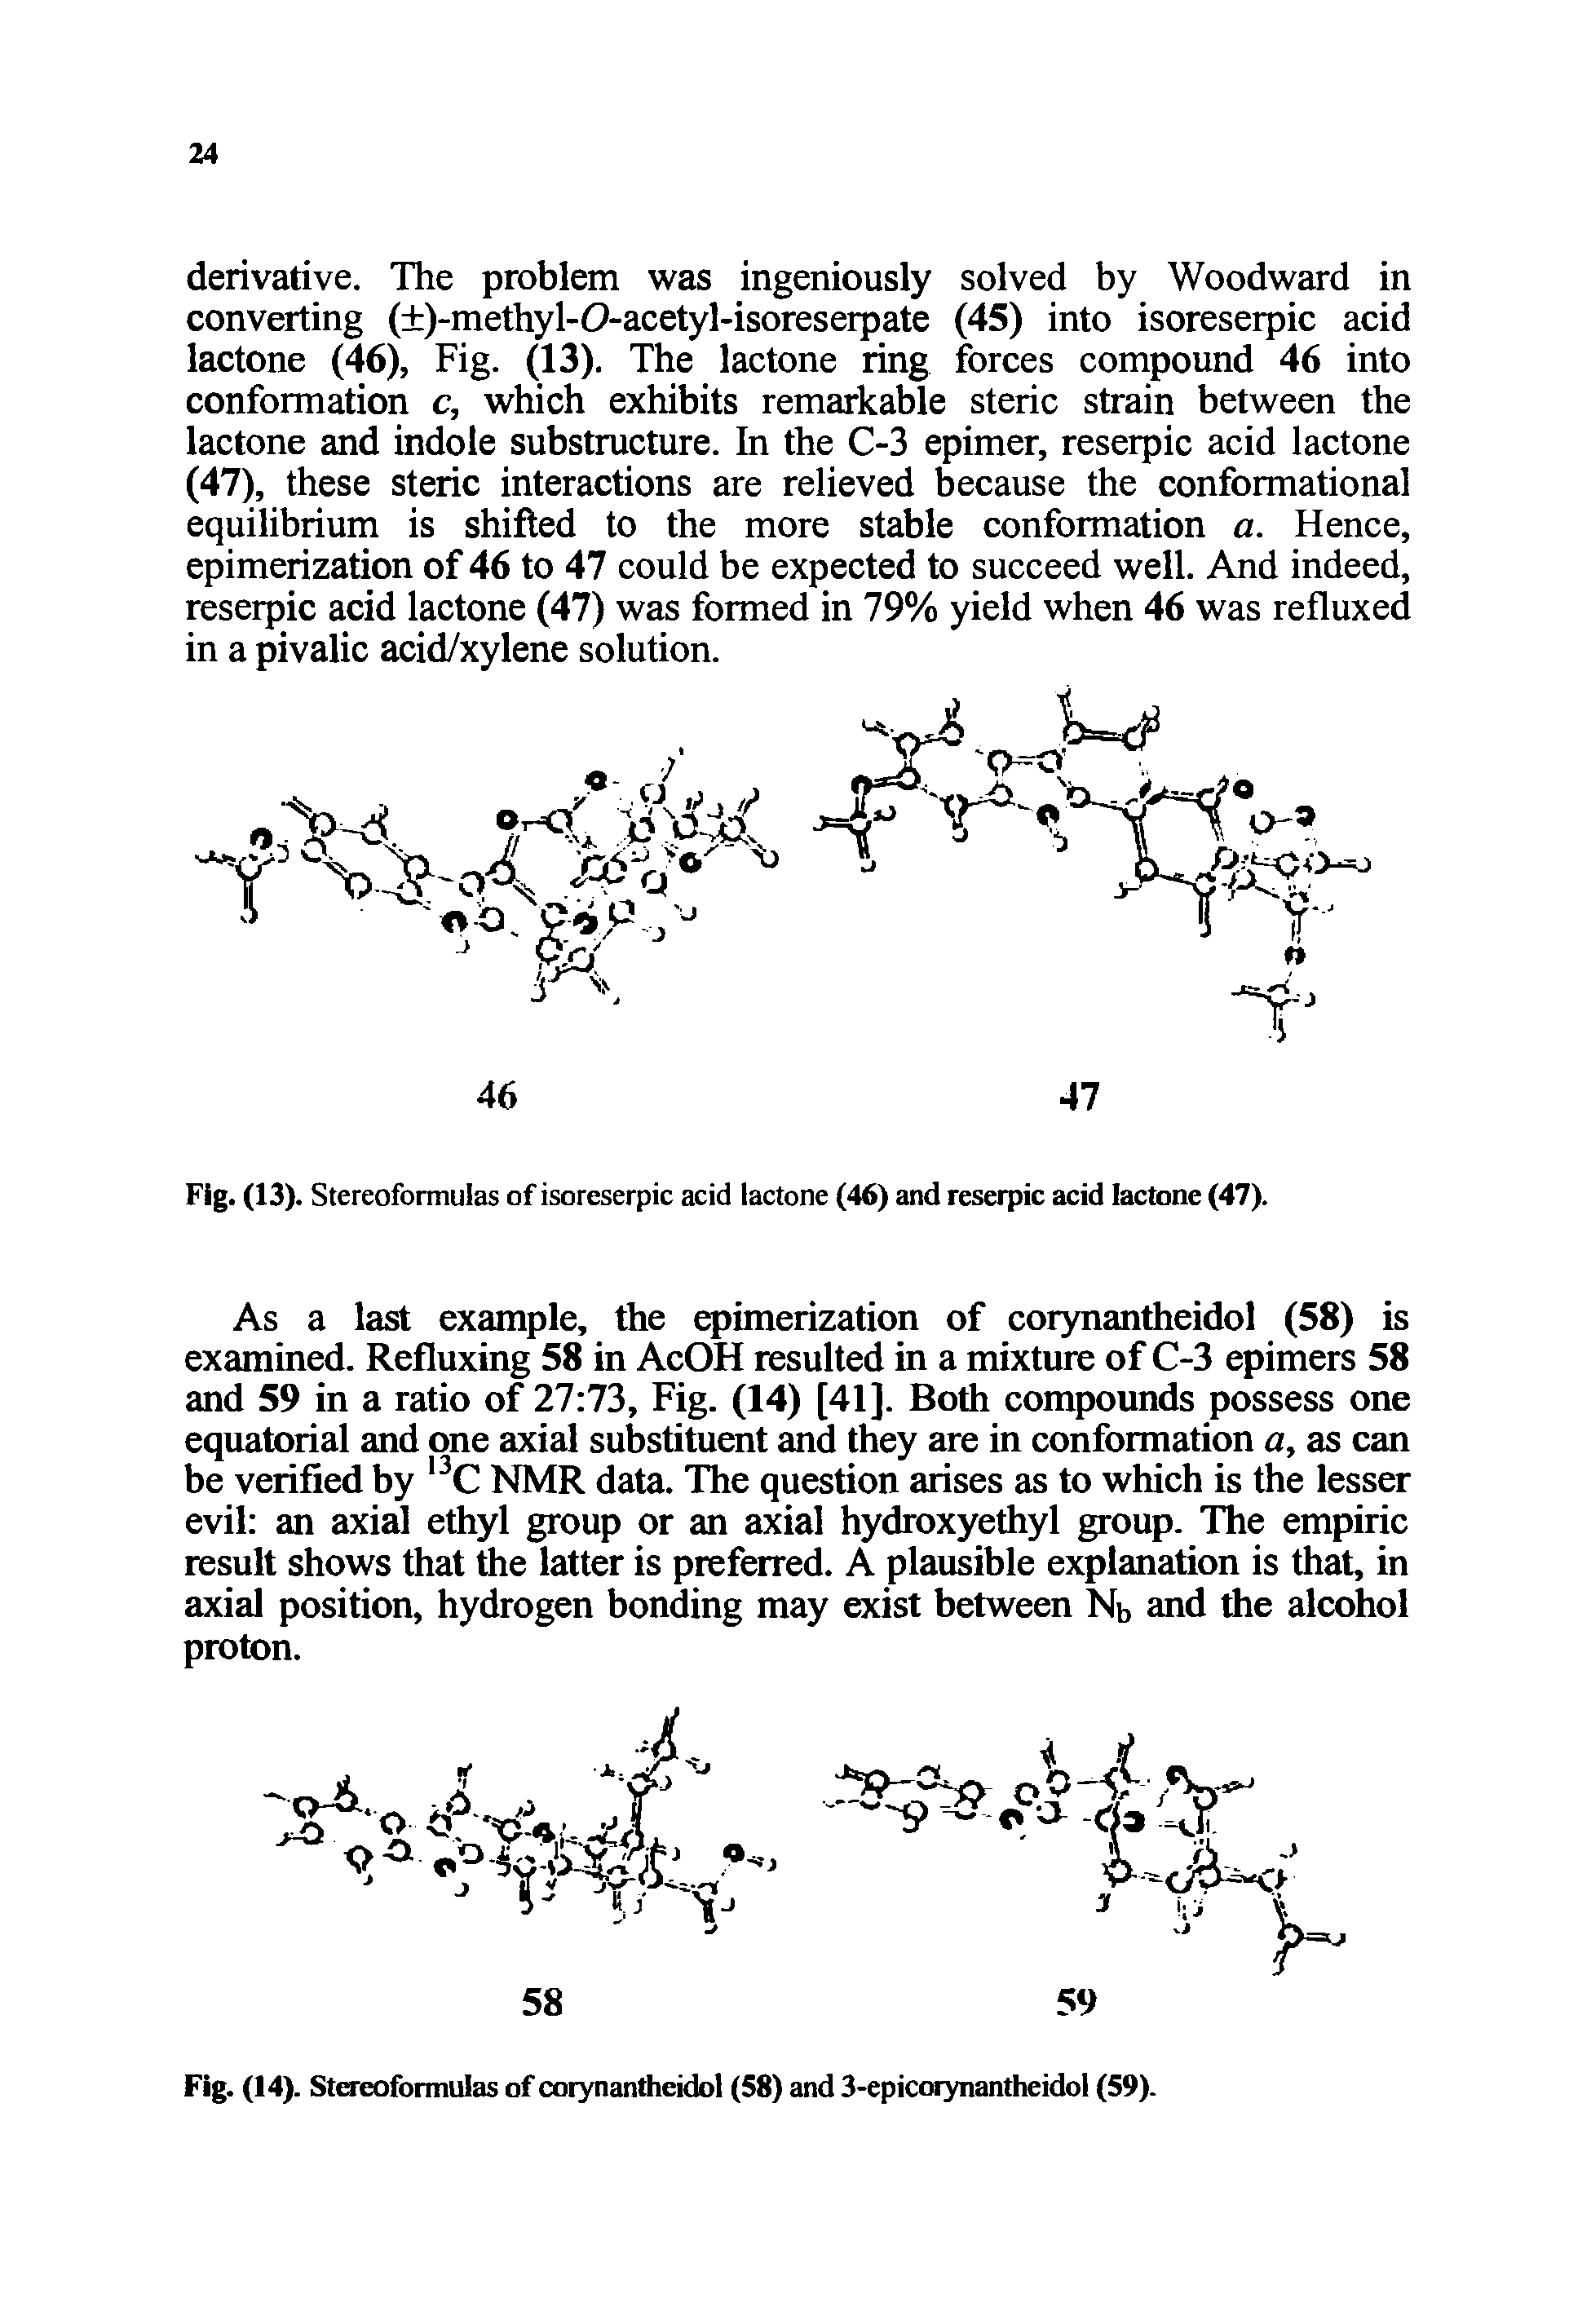 Fig. (13). Stereoformulas of isoreserpic acid lactone (46) and reserpic acid lactone (47).